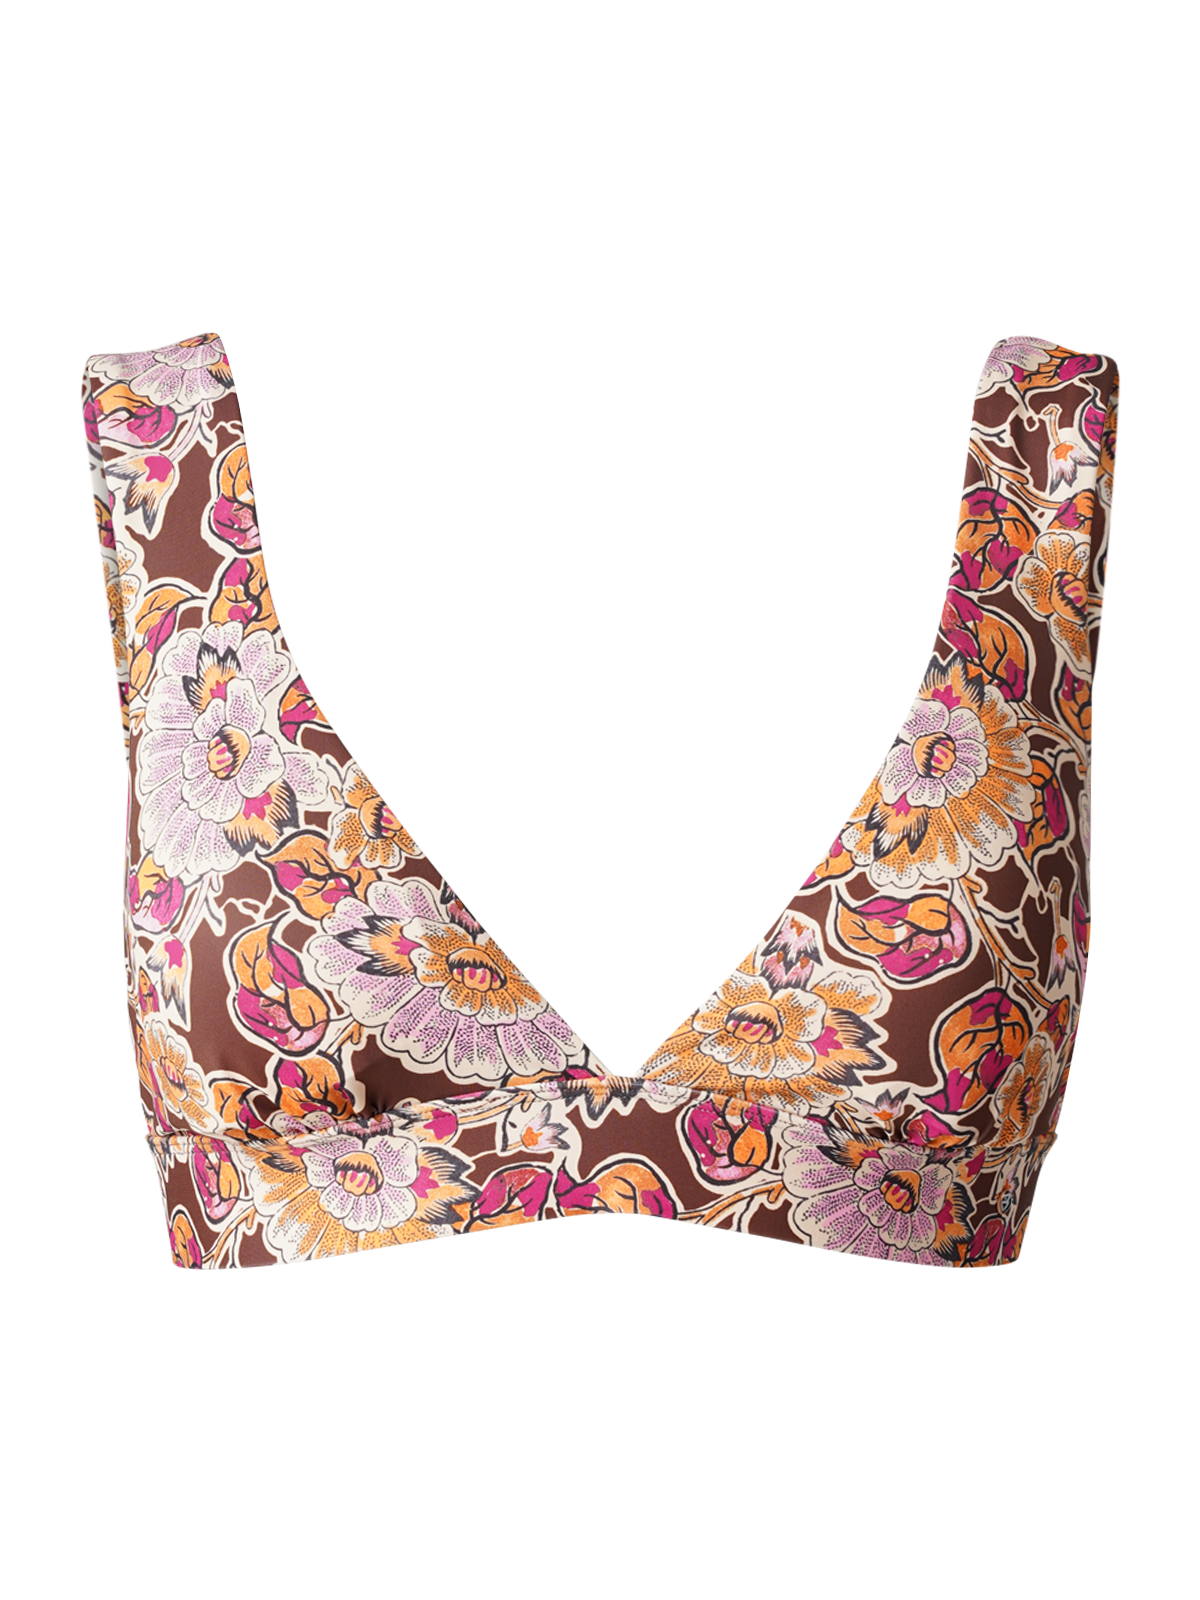 Forte-Sakai Damen Bralette Bikini Top | Multi Color